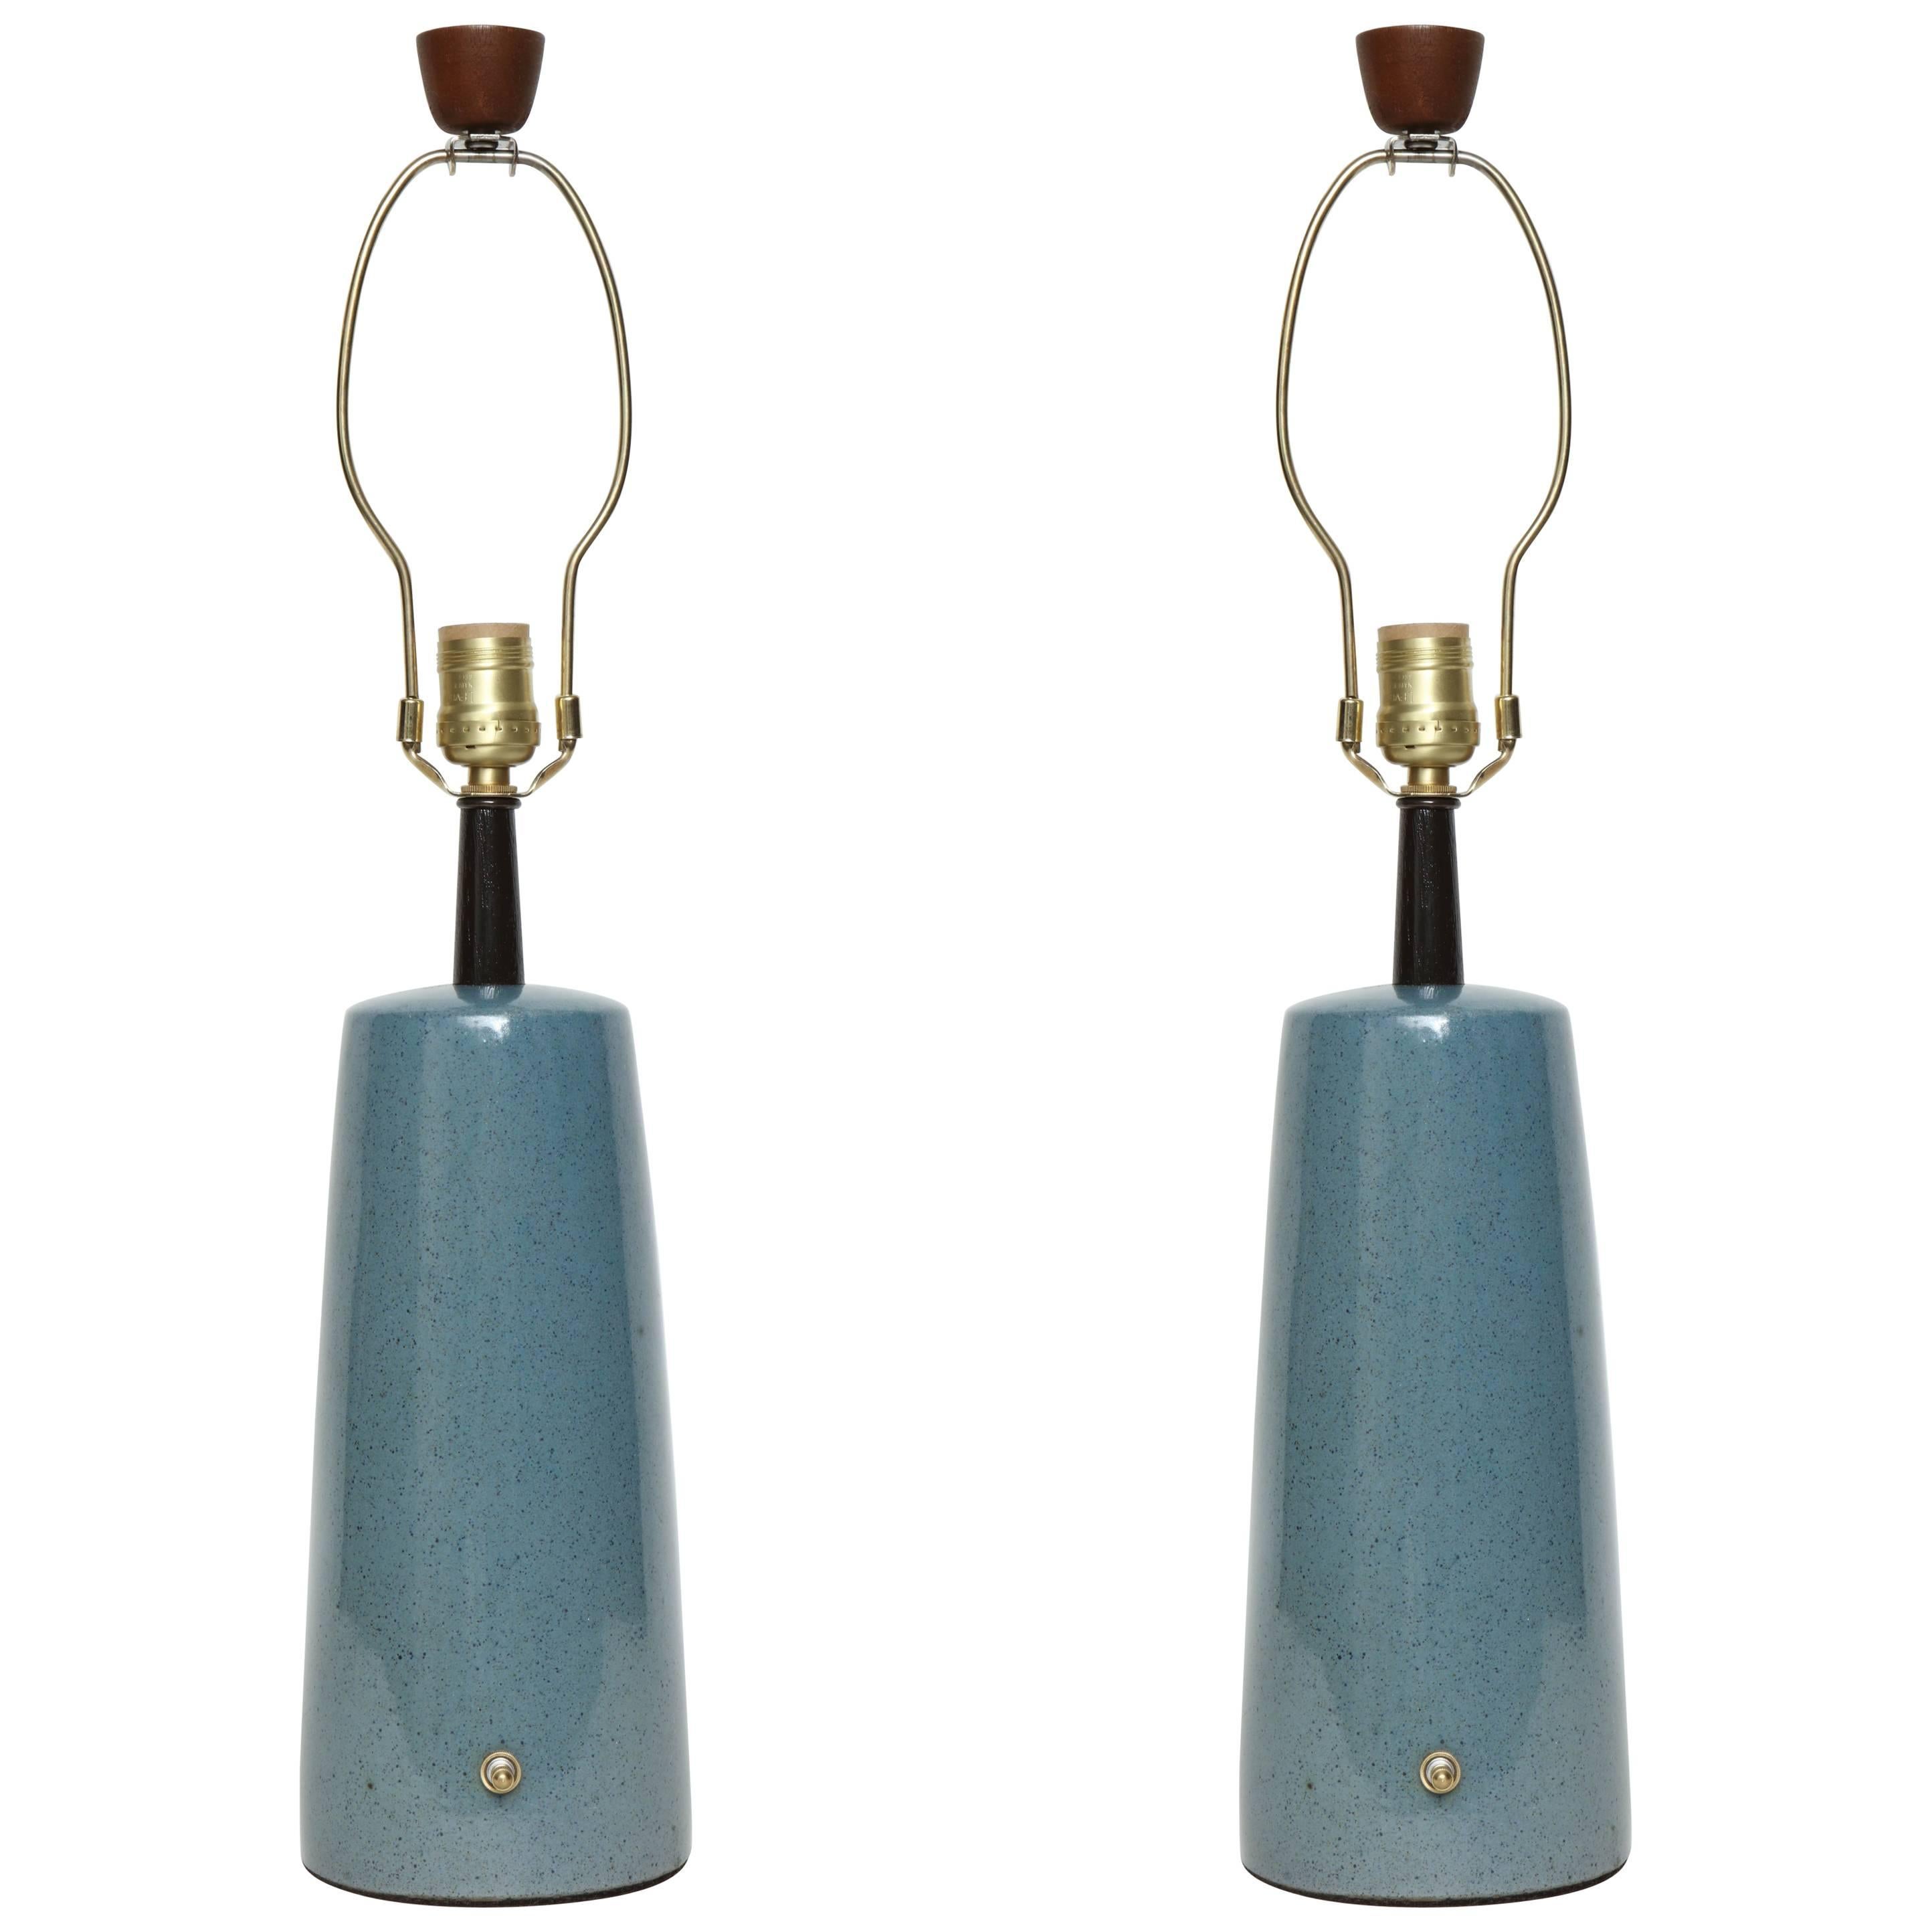 Gordon Martz Speckled Blue Ceramic Lamps